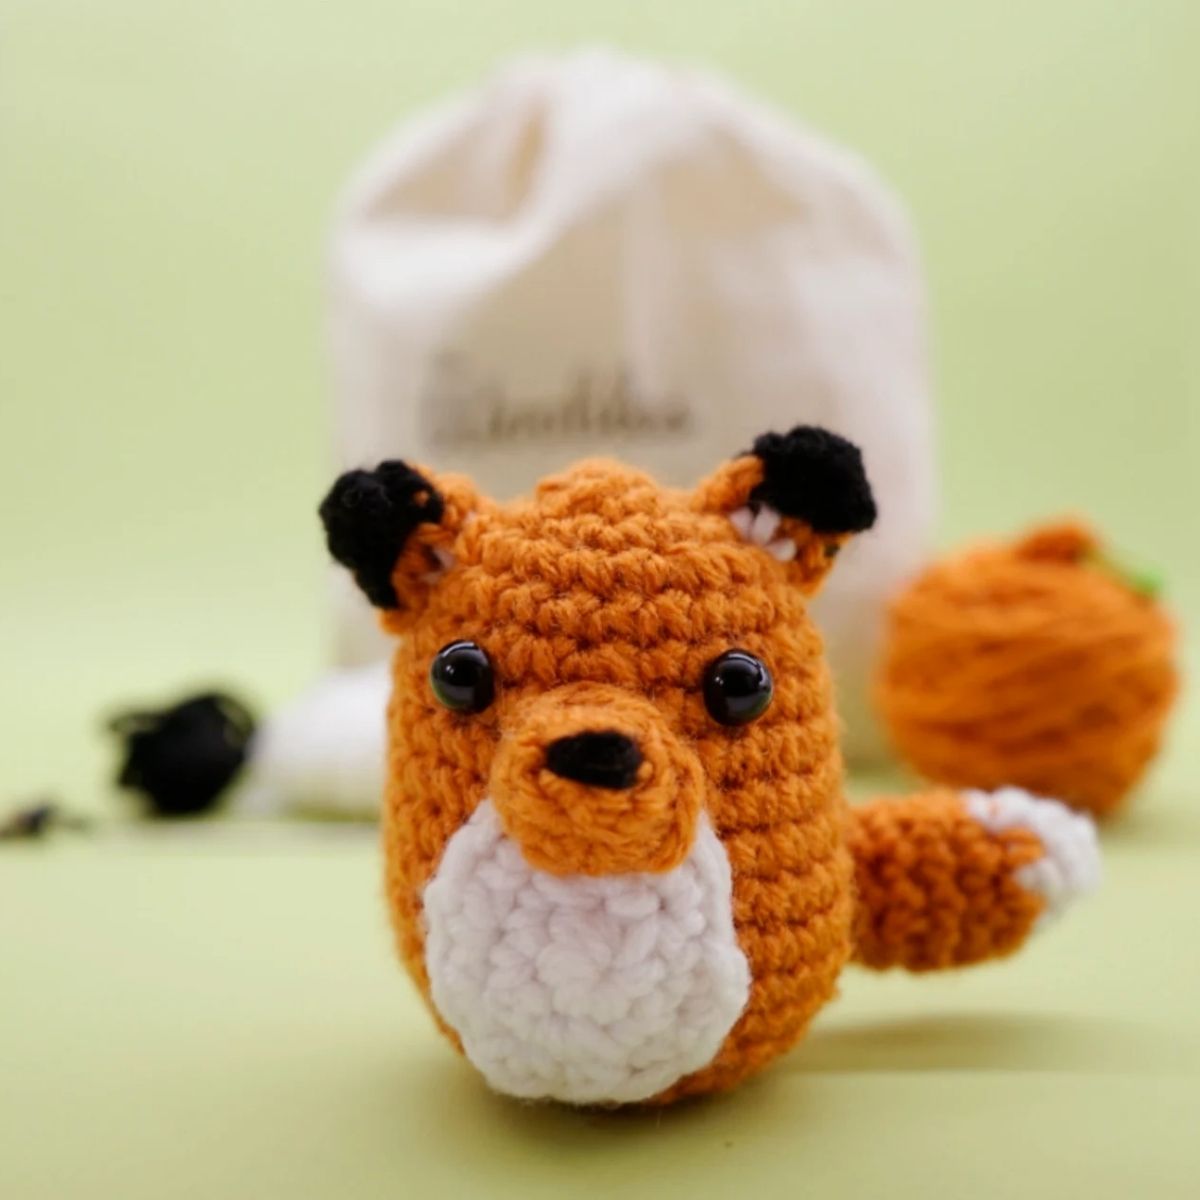 The Woobles Beginner Learn to Crochet Kit